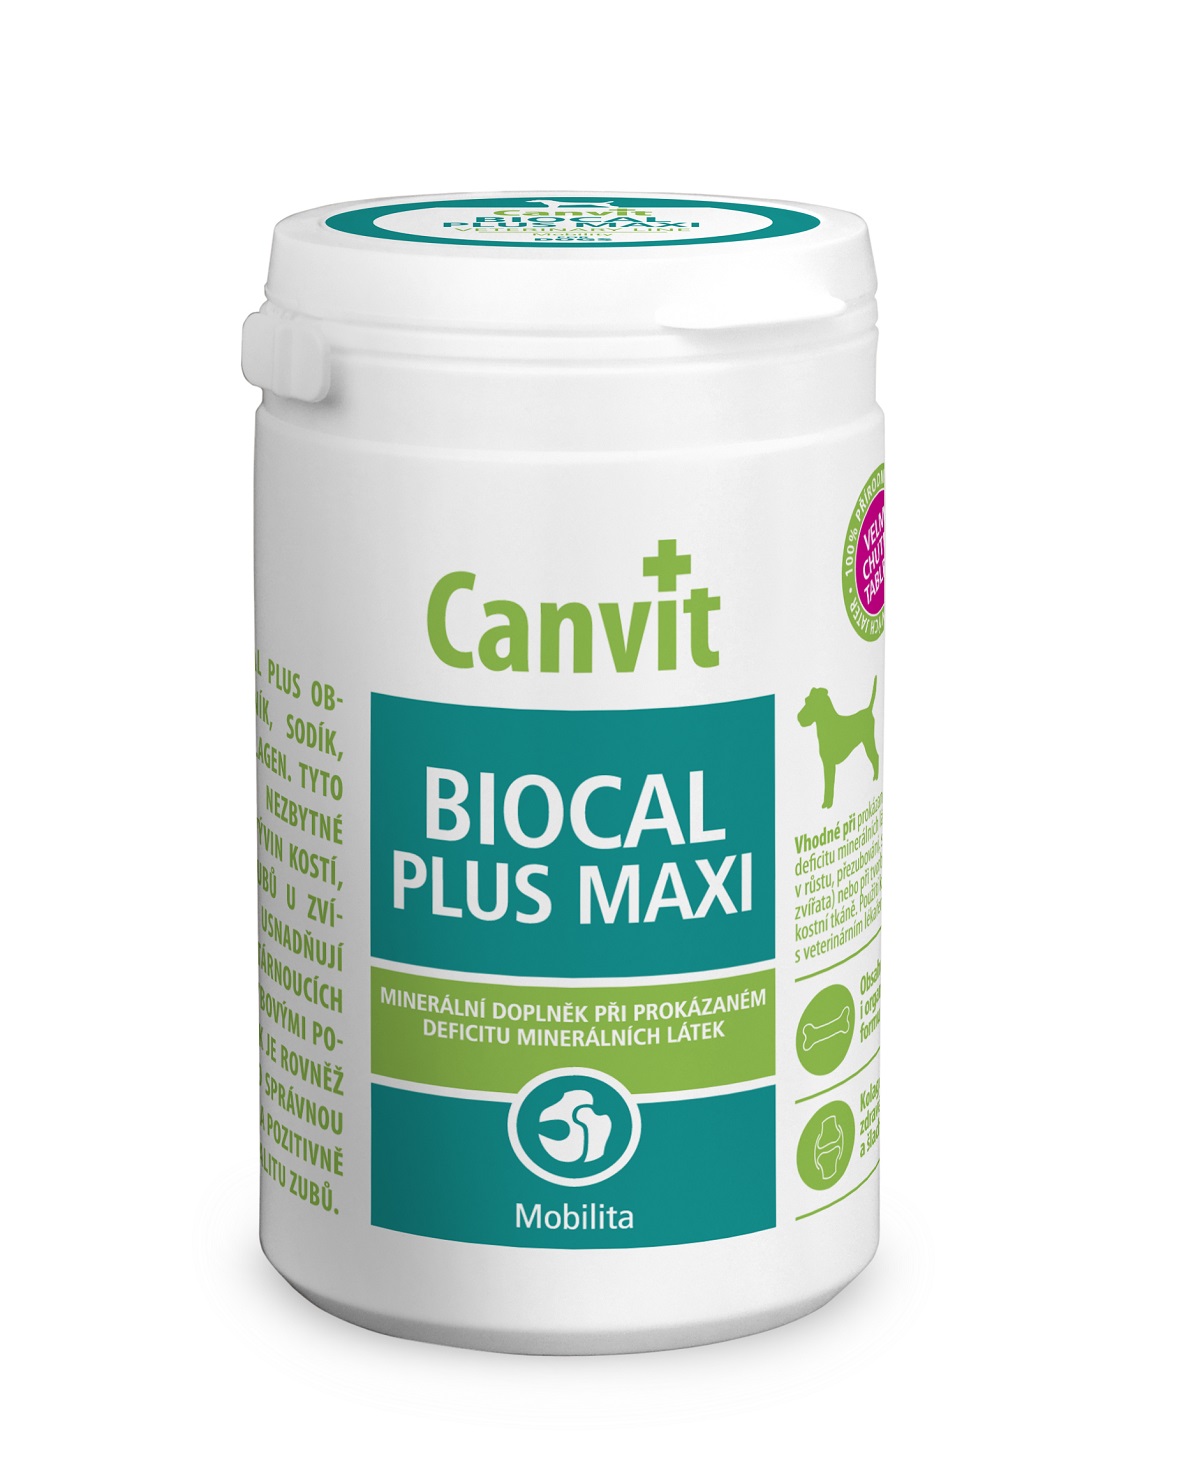 CANVIT Biocal Plus MAXI pro psy ochucené tbl 230g